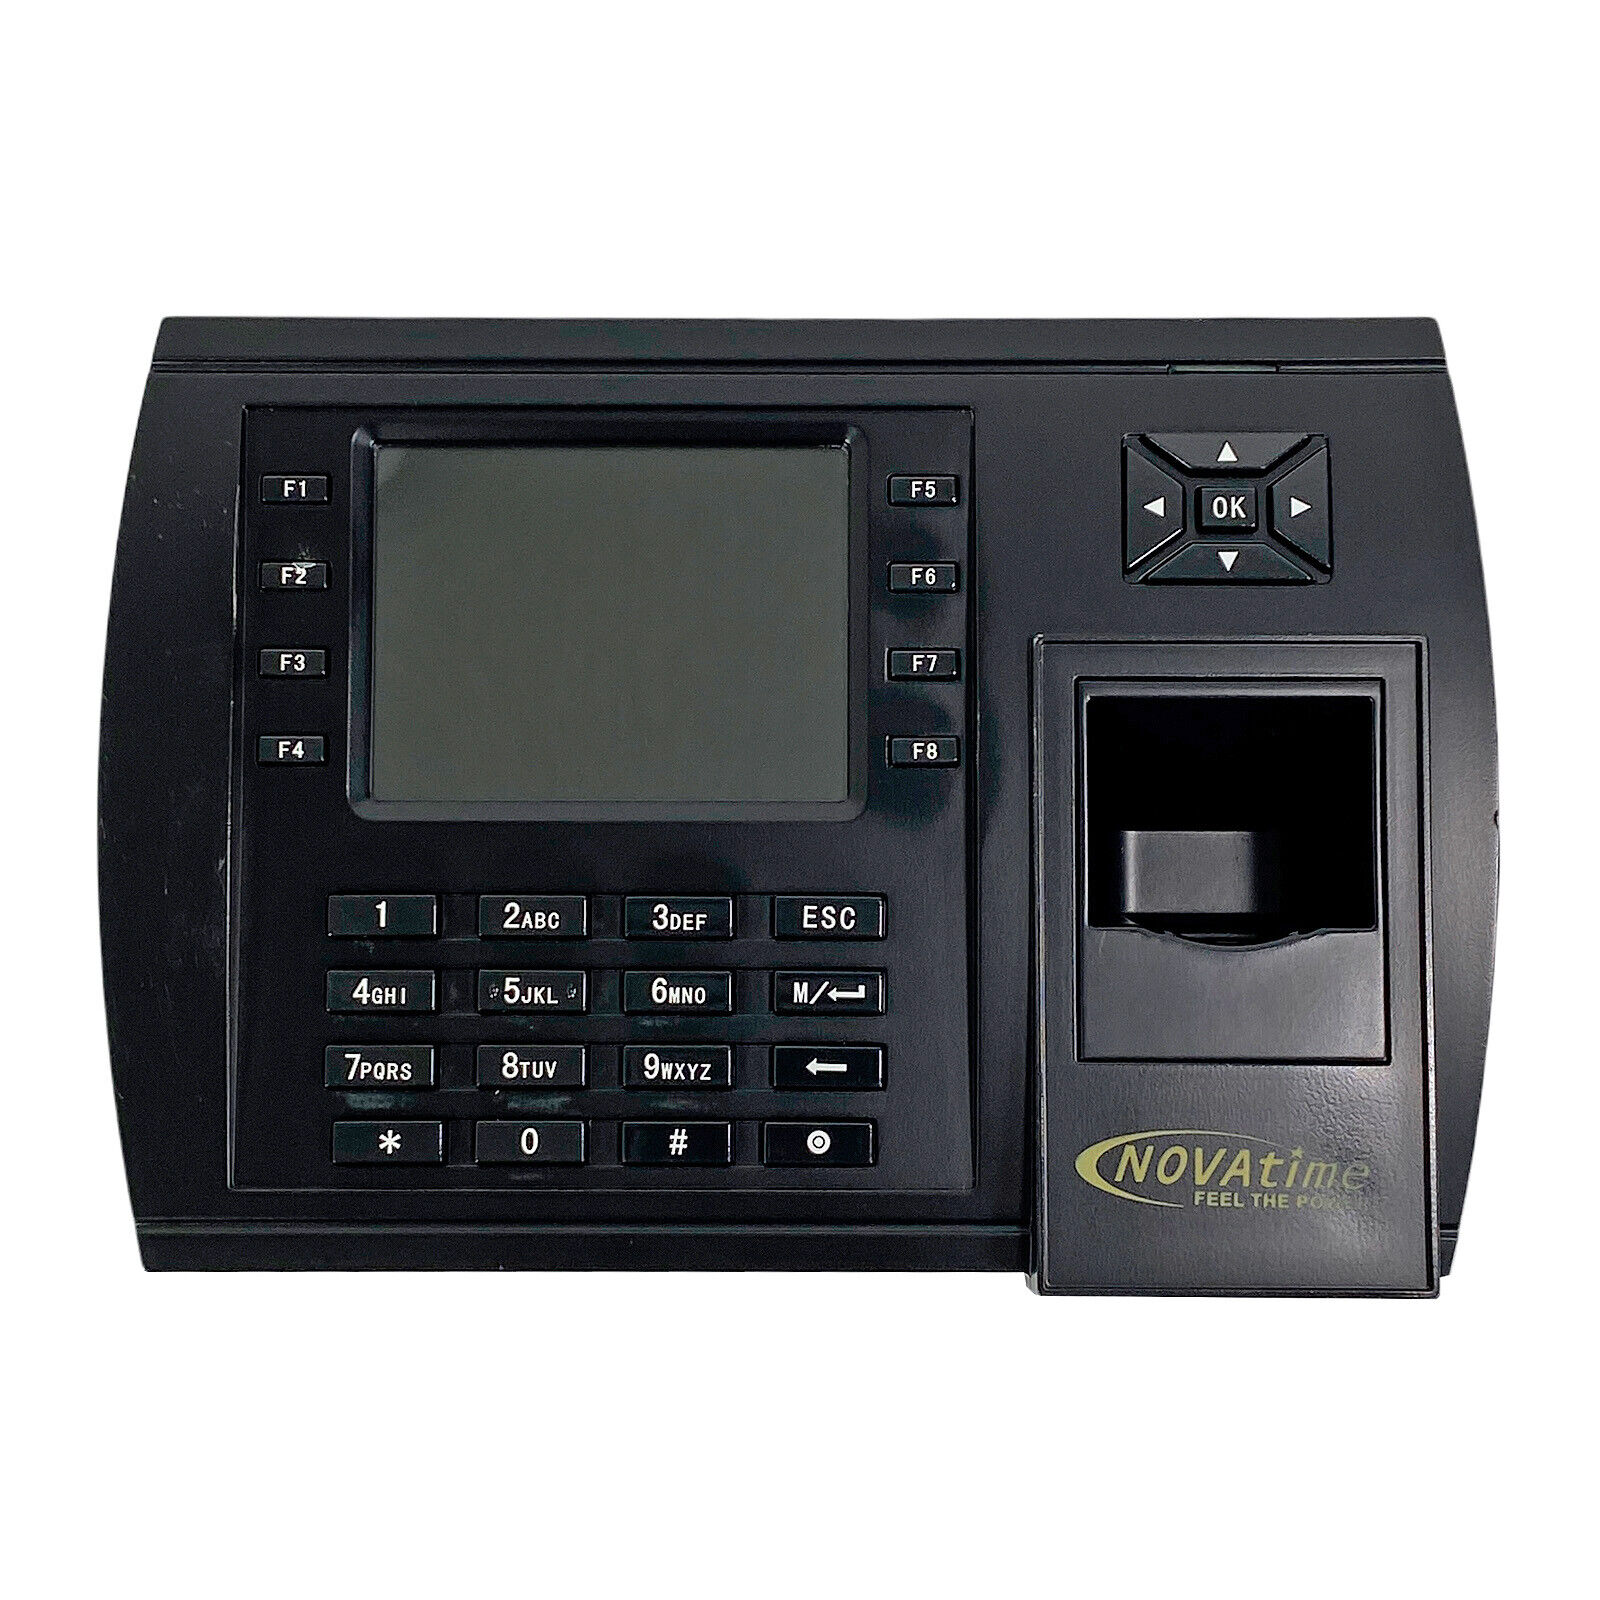 LOT OF 2 Novatime NT450-FP Fingerprint Access Control Time Clock Terminal  NOVATIME Does not apply - фотография #2